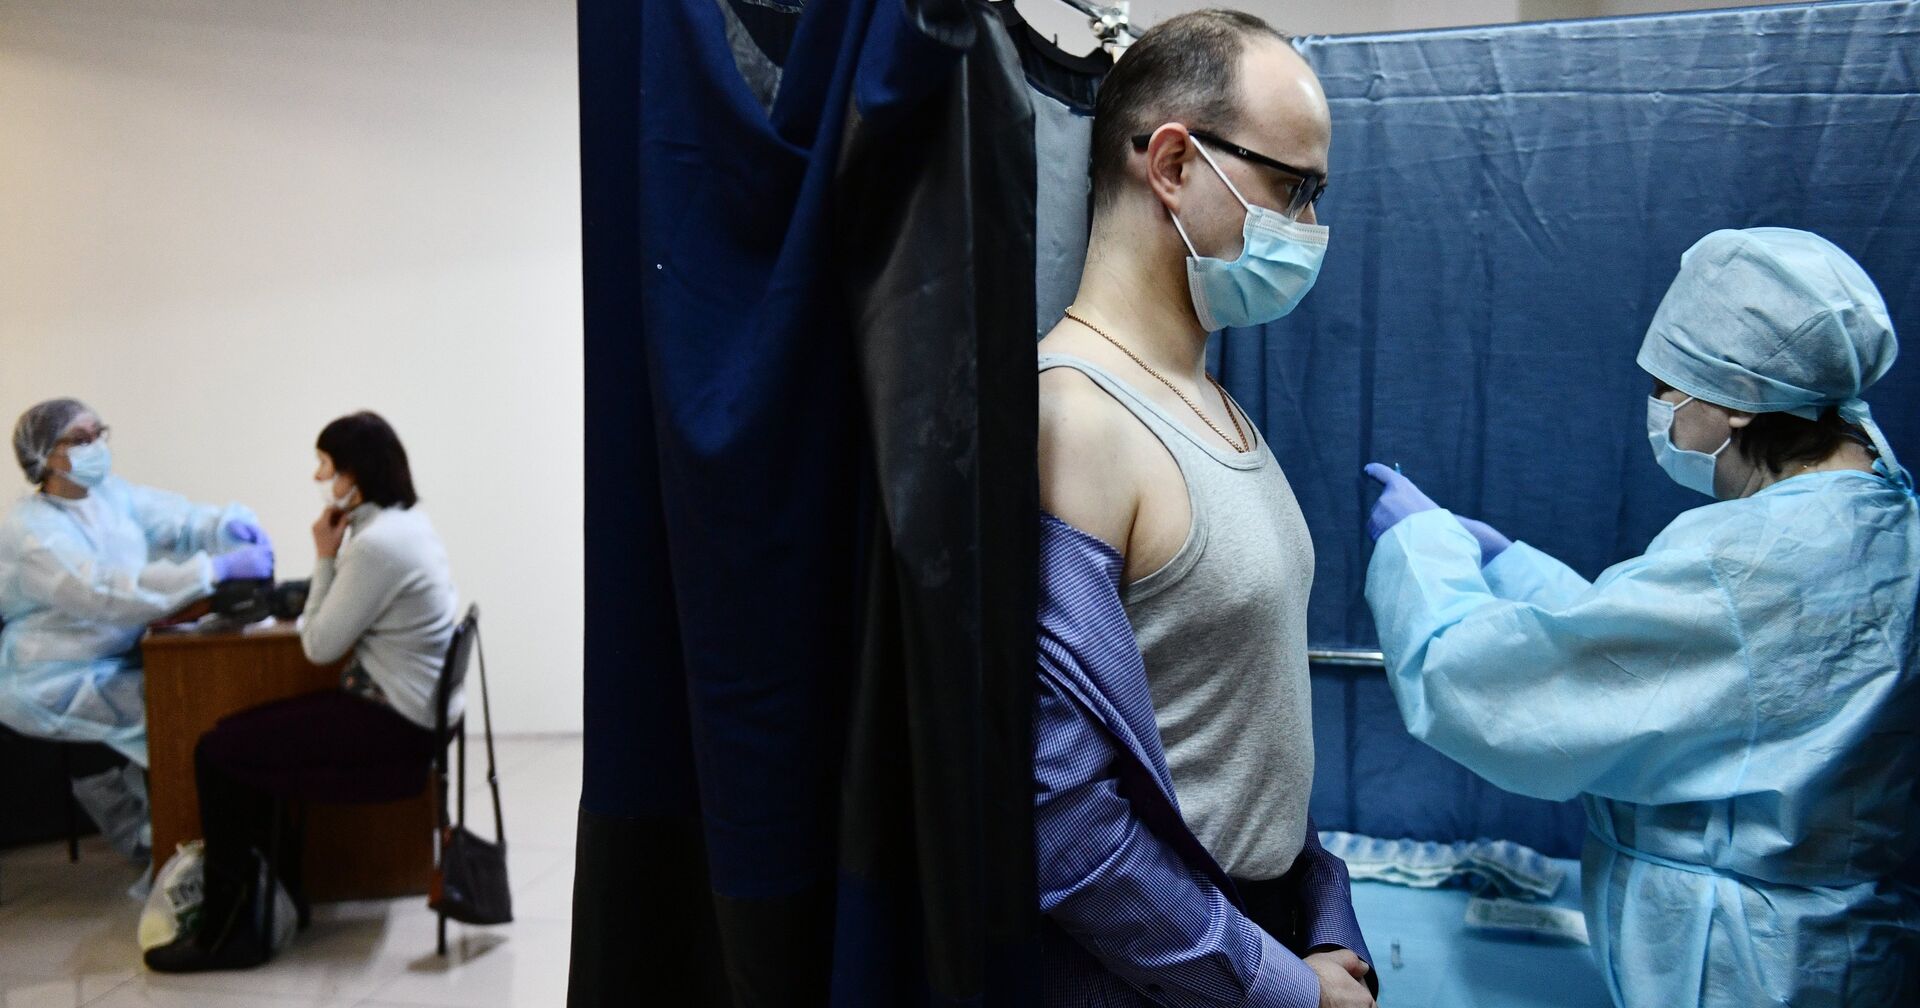 Мужчина вакцинируется российским препаратом «Спутник V» - ИноСМИ, 1920, 19.03.2021